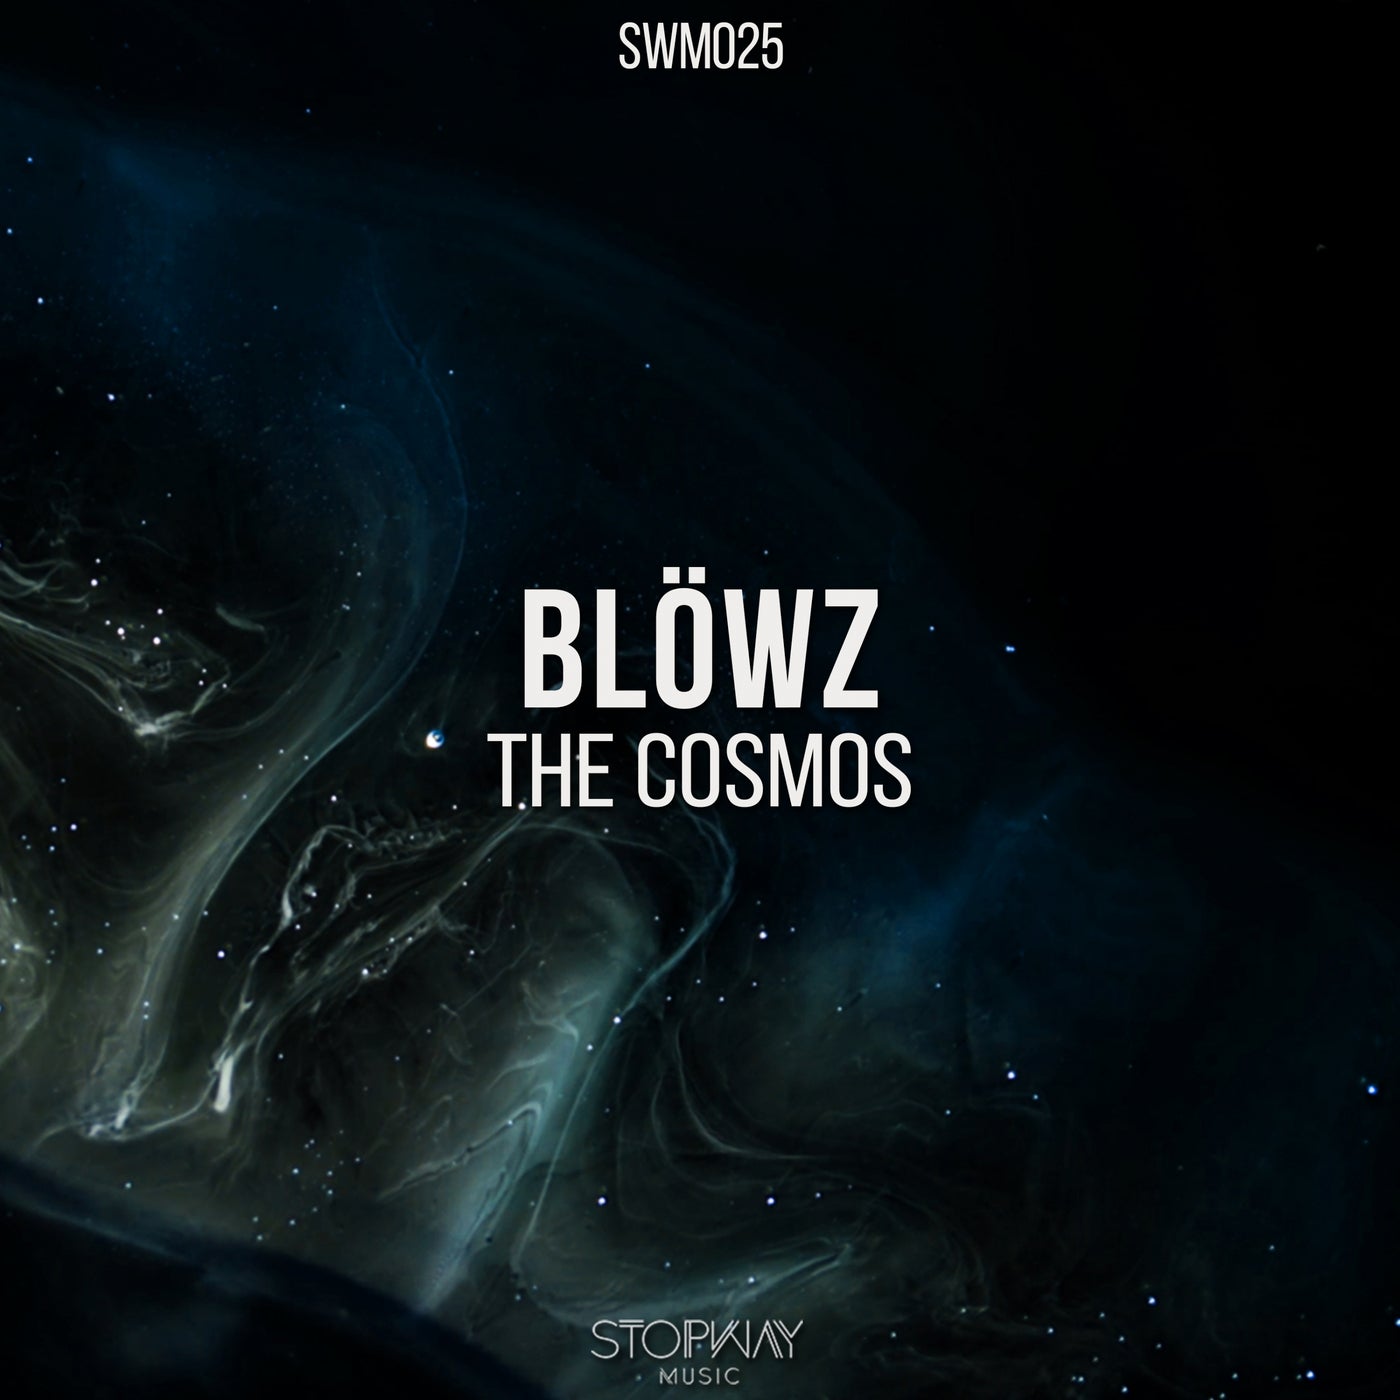 Blöwz – The Cosmos [SWM025]